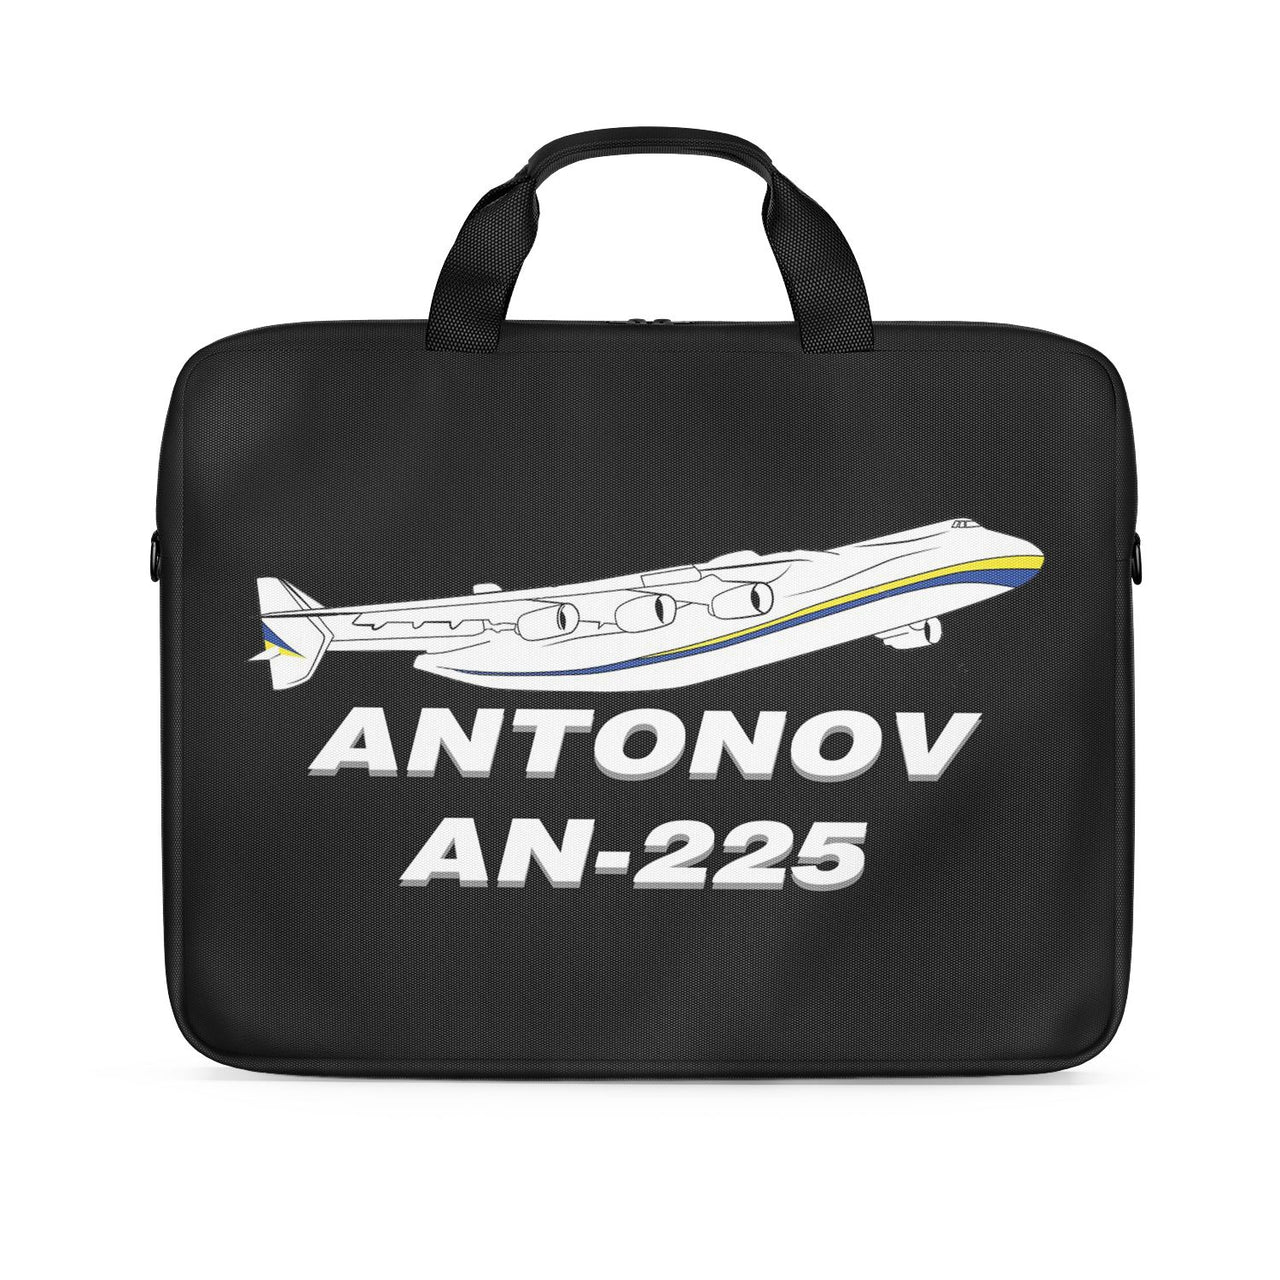 Antonov AN-225 (27) Designed Laptop & Tablet Bags